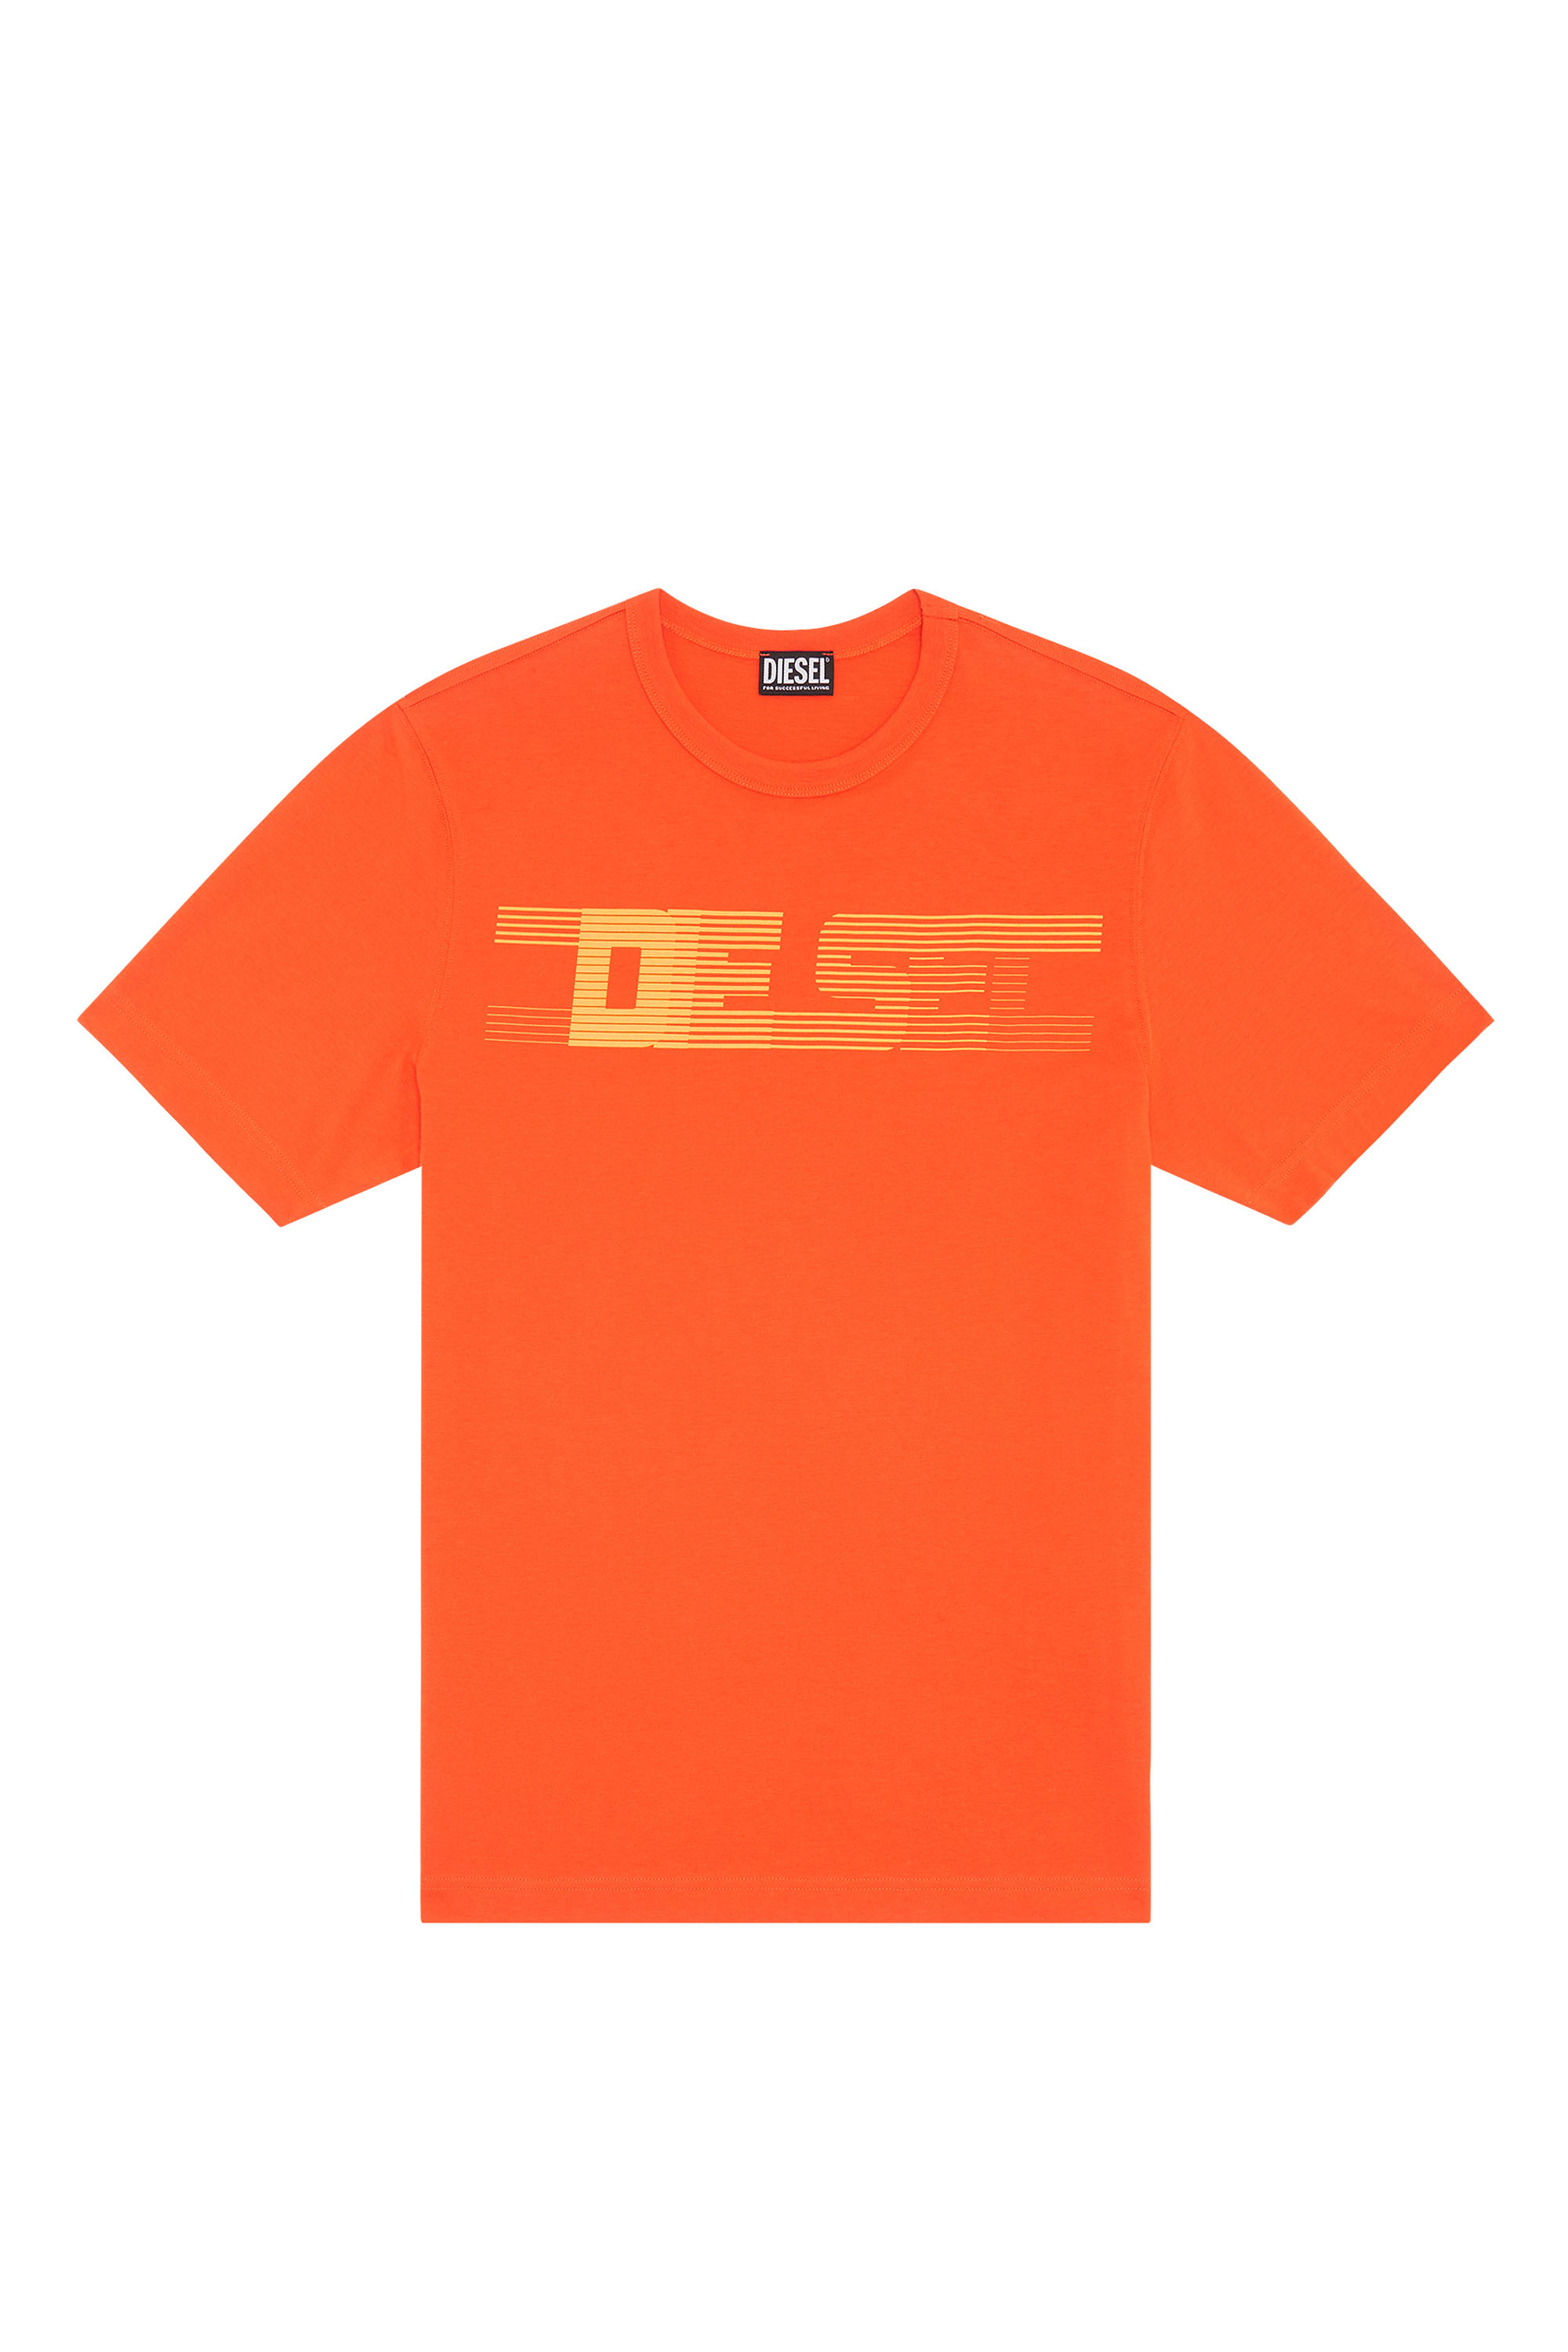 Diesel - T-JUST-E19, Orange - Image 3